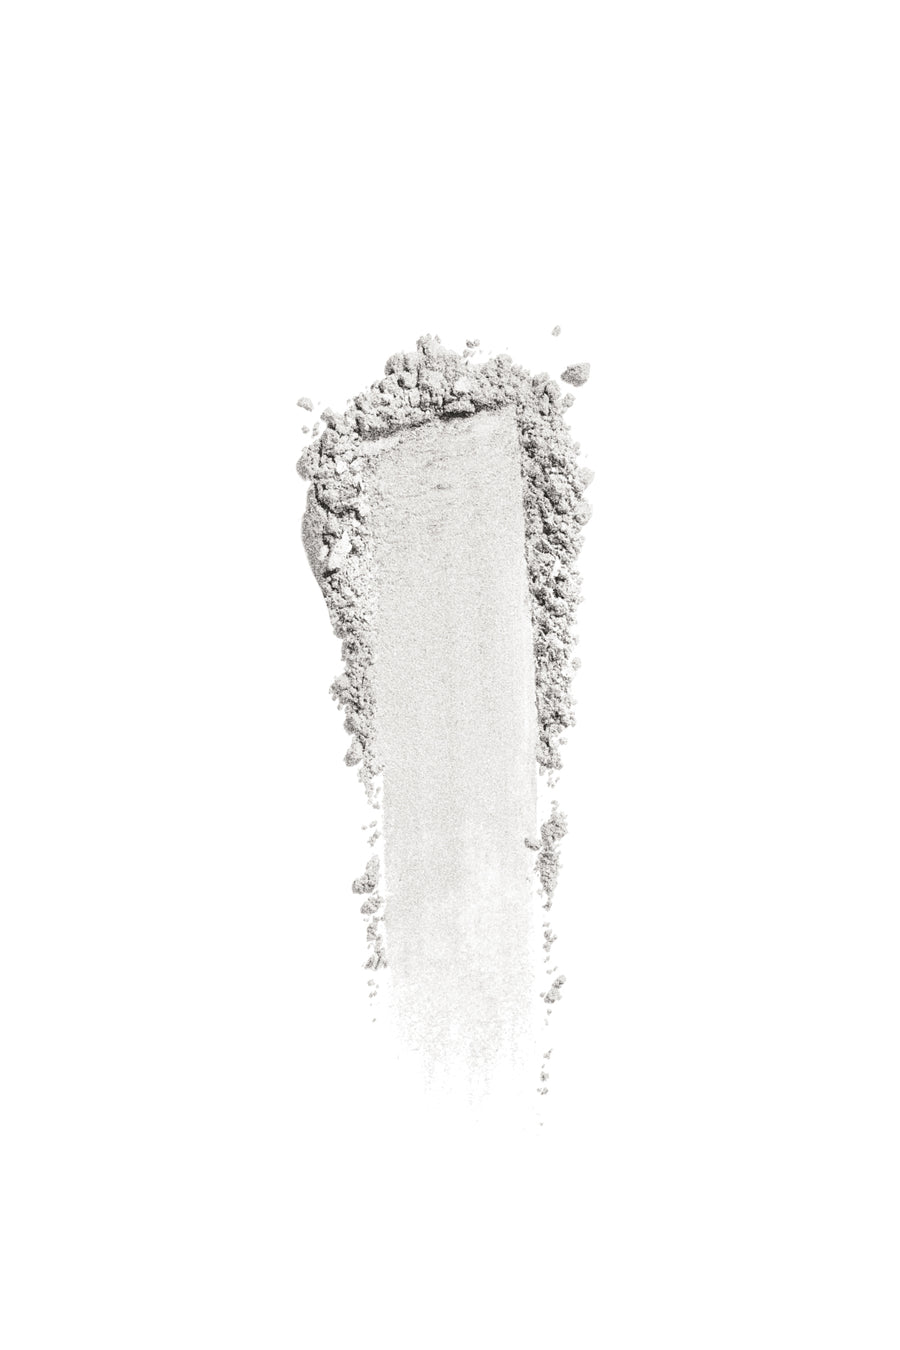 Shimmer Eyeshadow #40 - Shimmery White - Blend Mineral Cosmetics